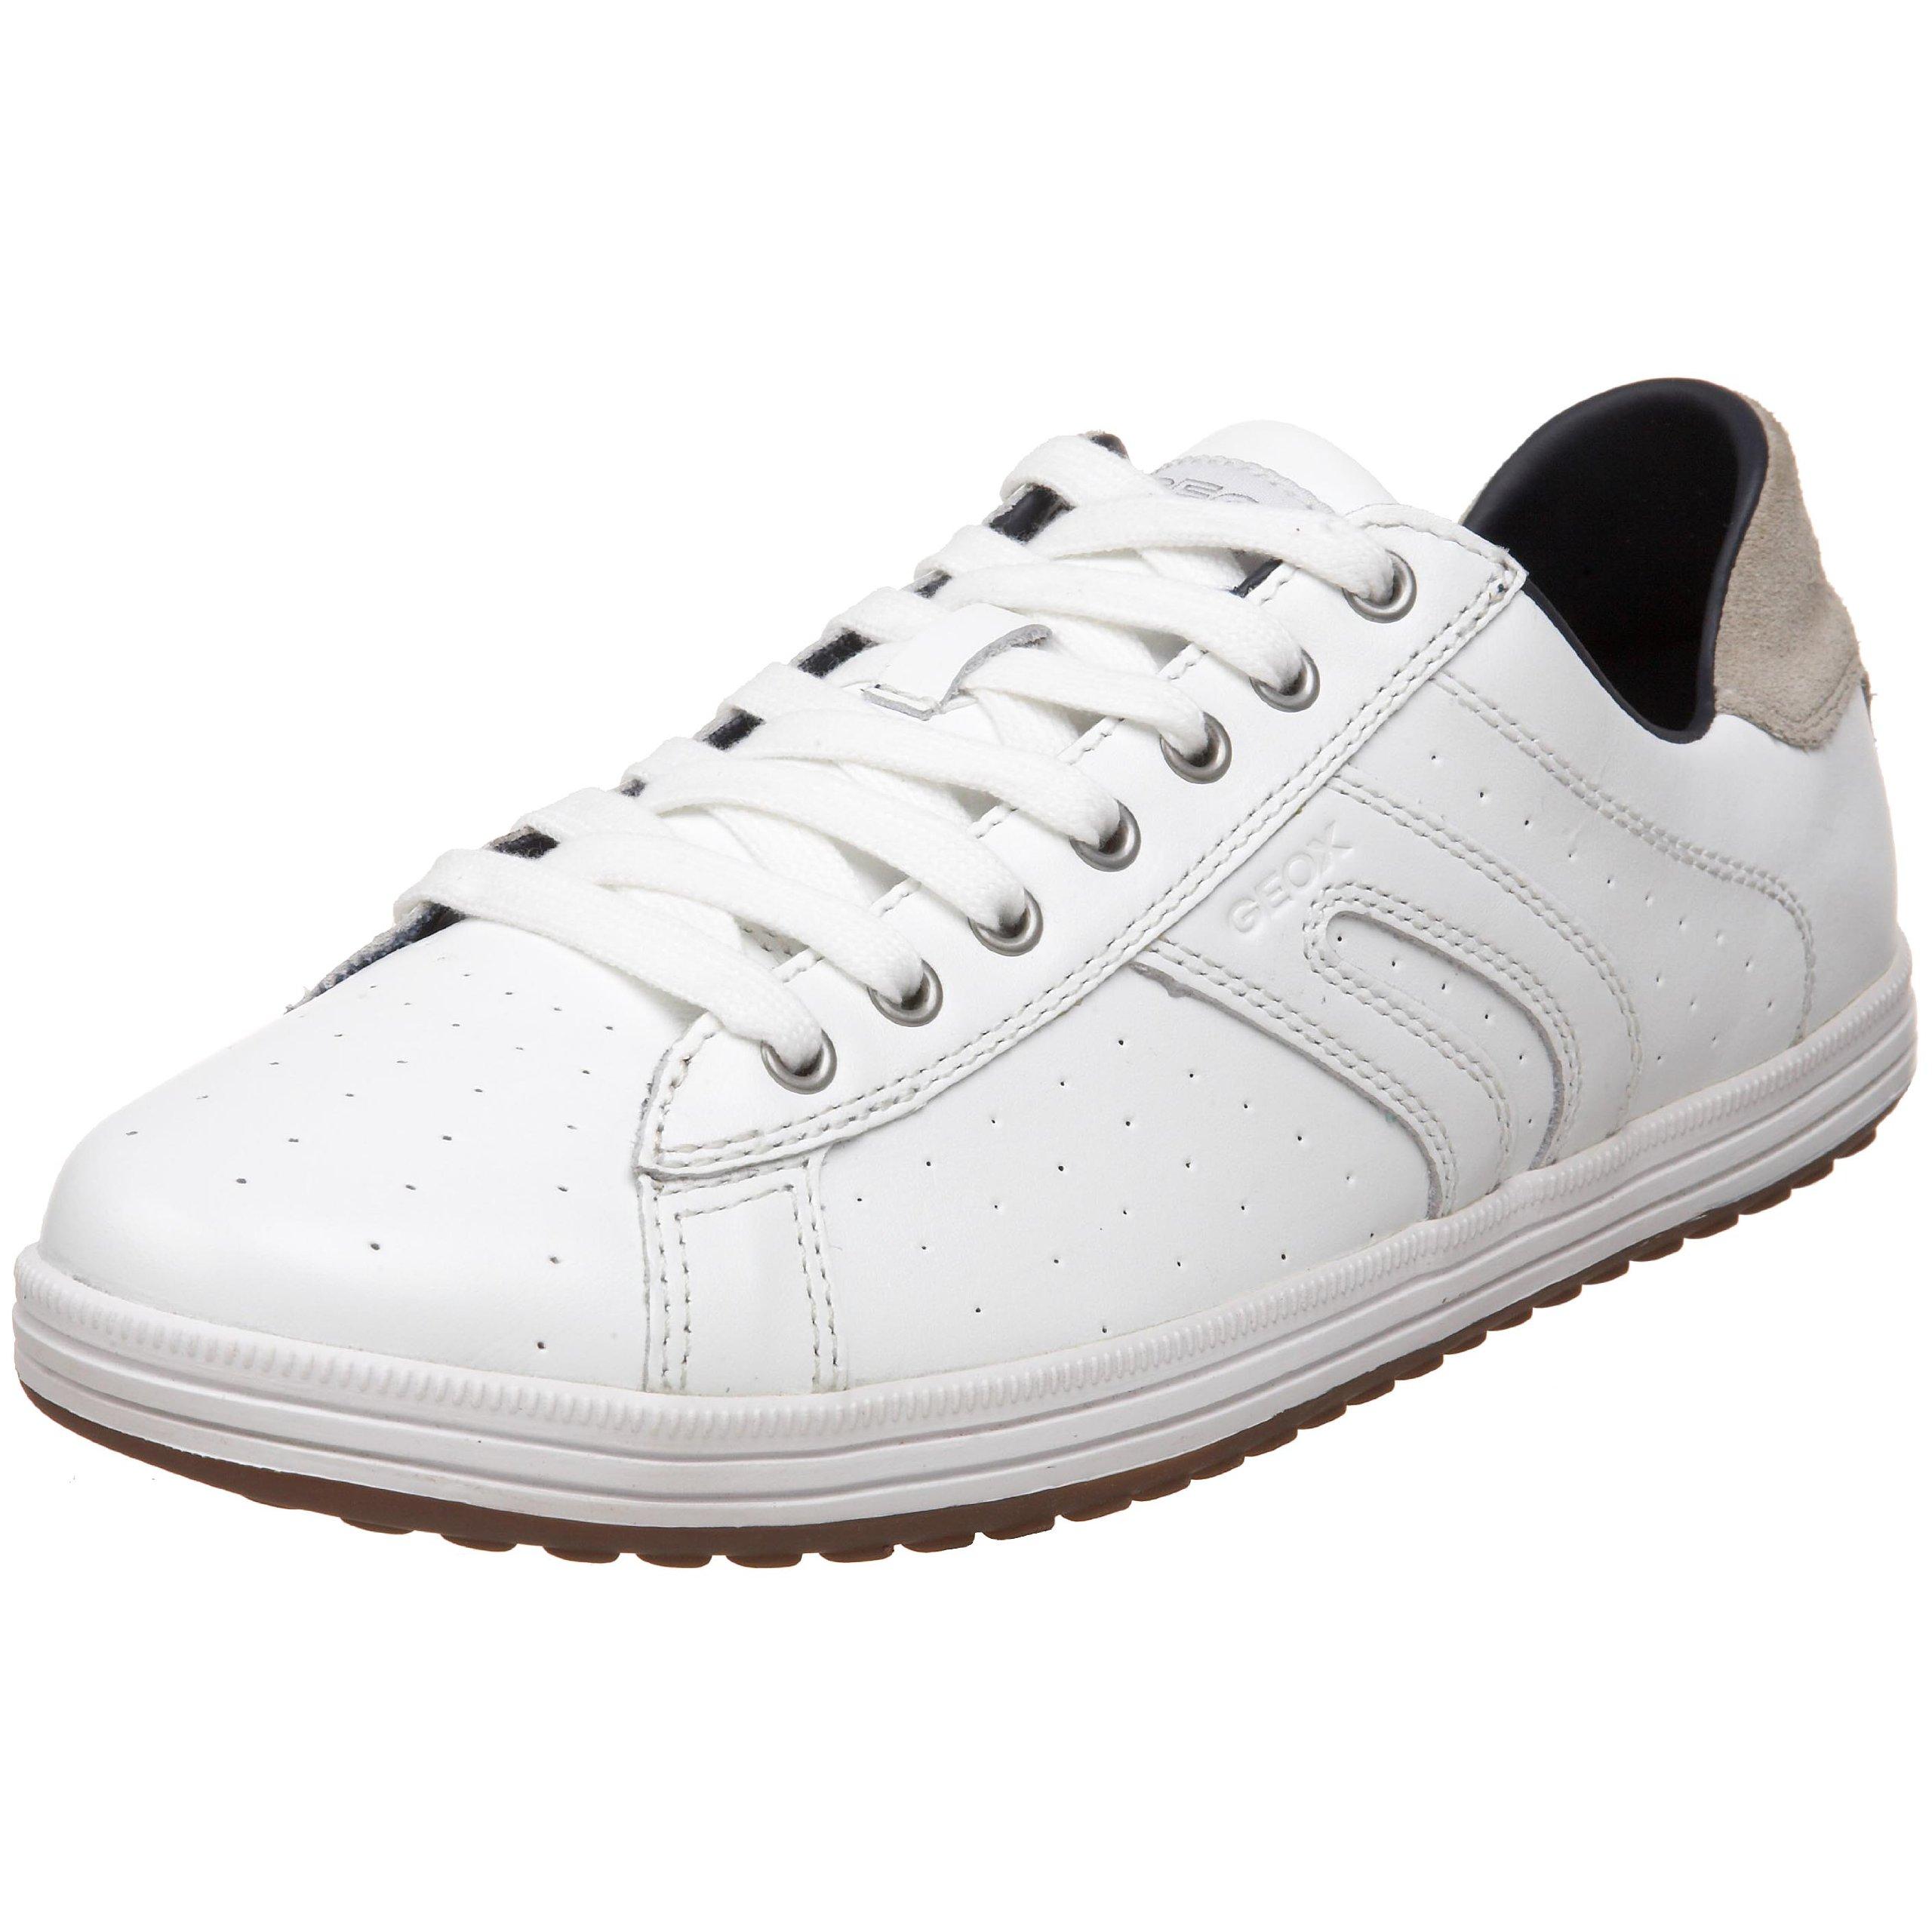 Geox Uomo Vita Fashion Sneaker,white/navy,39 Eu for Men | Lyst